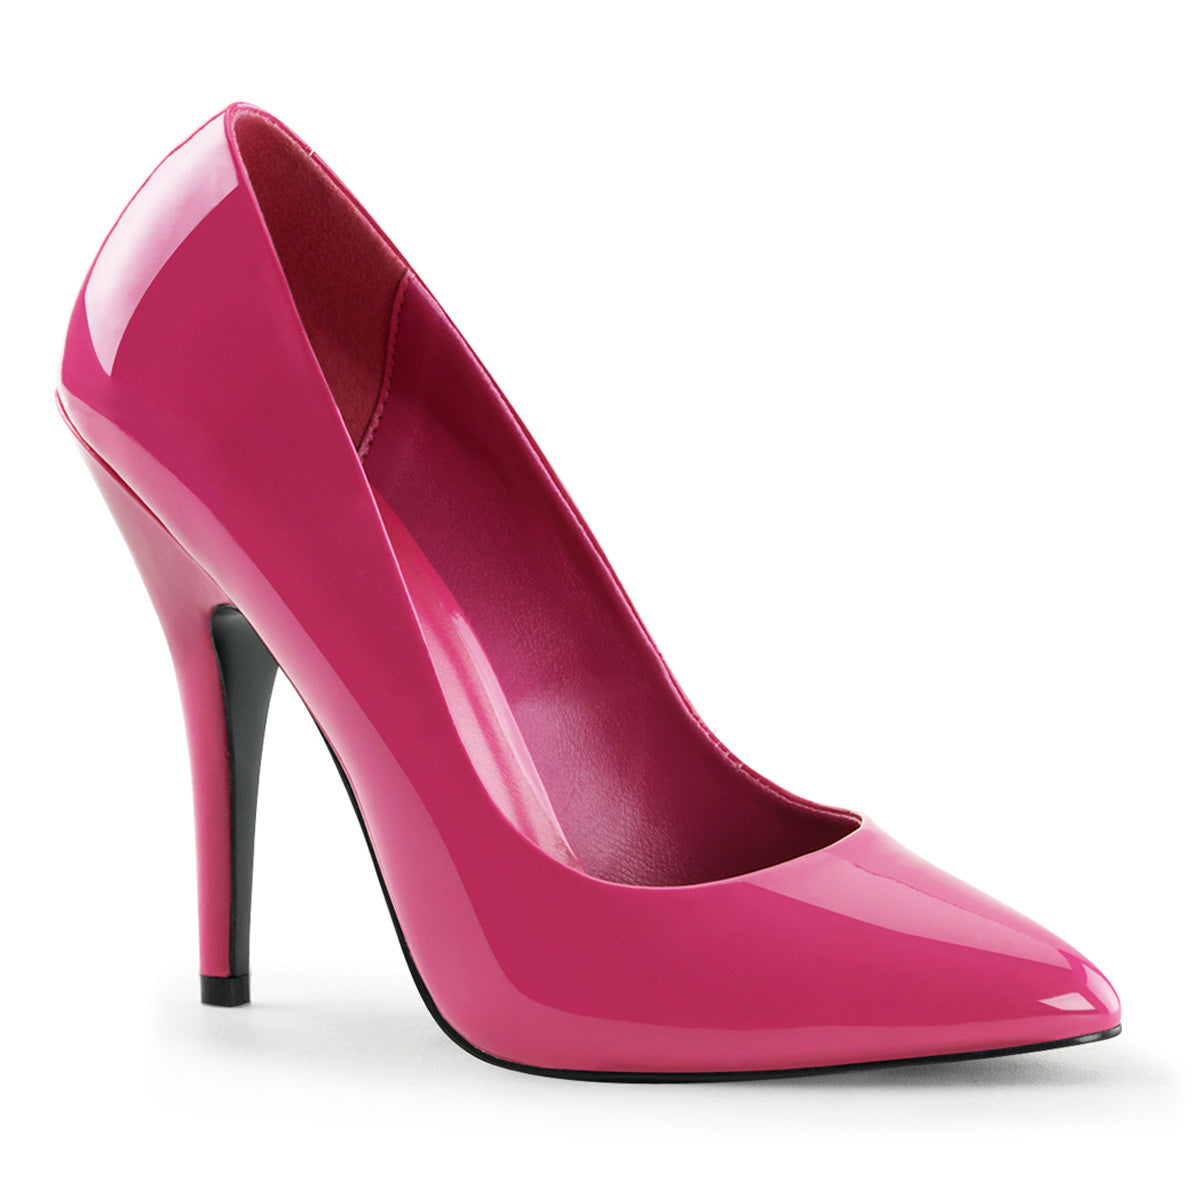 SEDUCE-420 Hot Pink High Heels